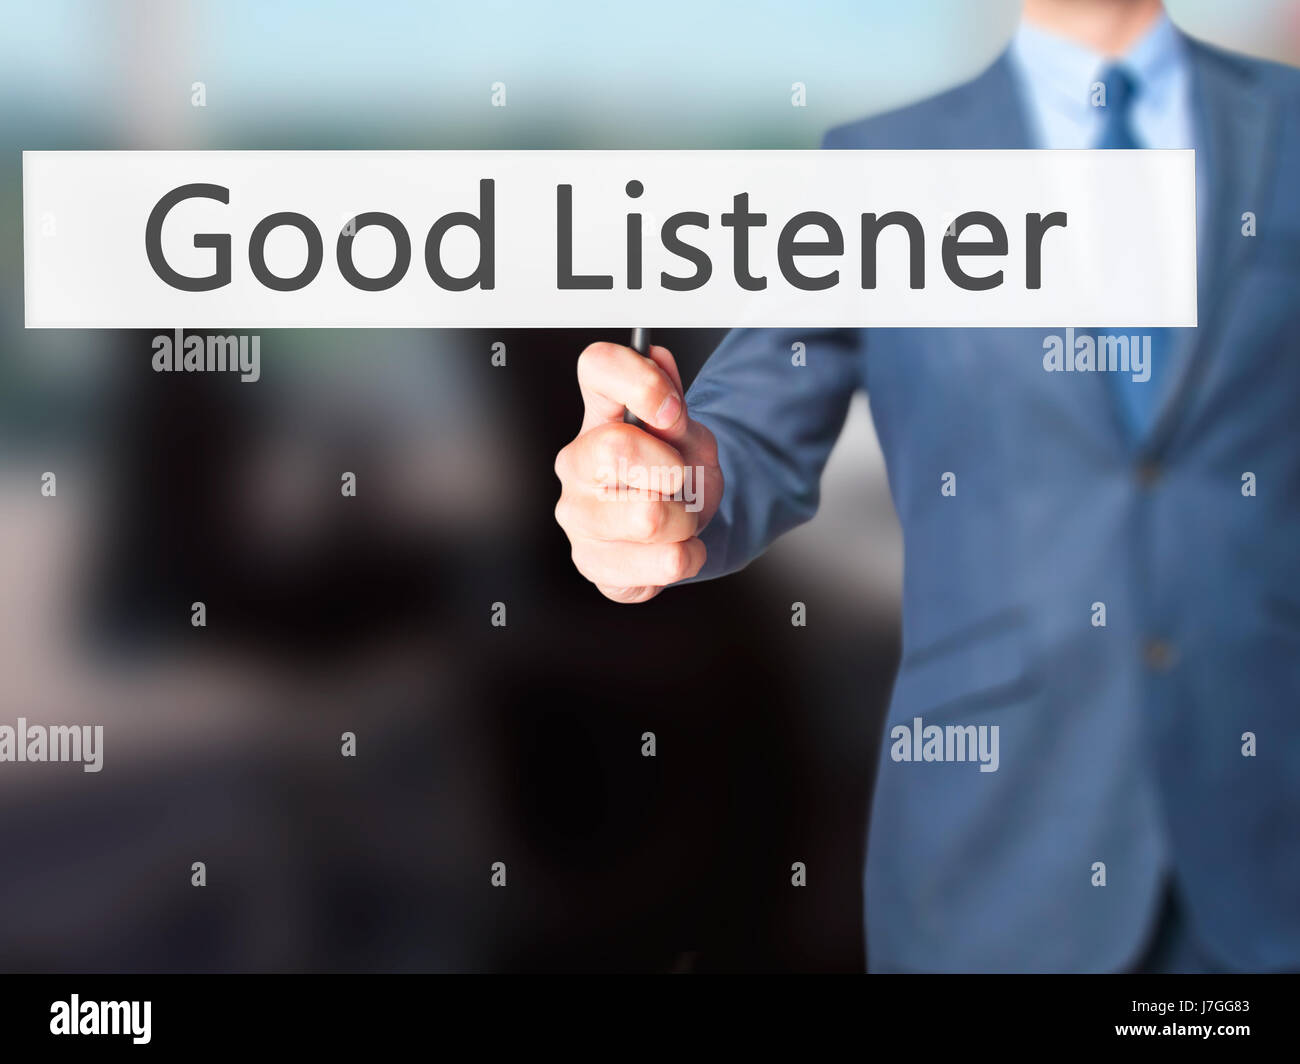 Good Listener - Businessman hand holding sign. Business, technology, internet concept. Stock Photo Stock Photo